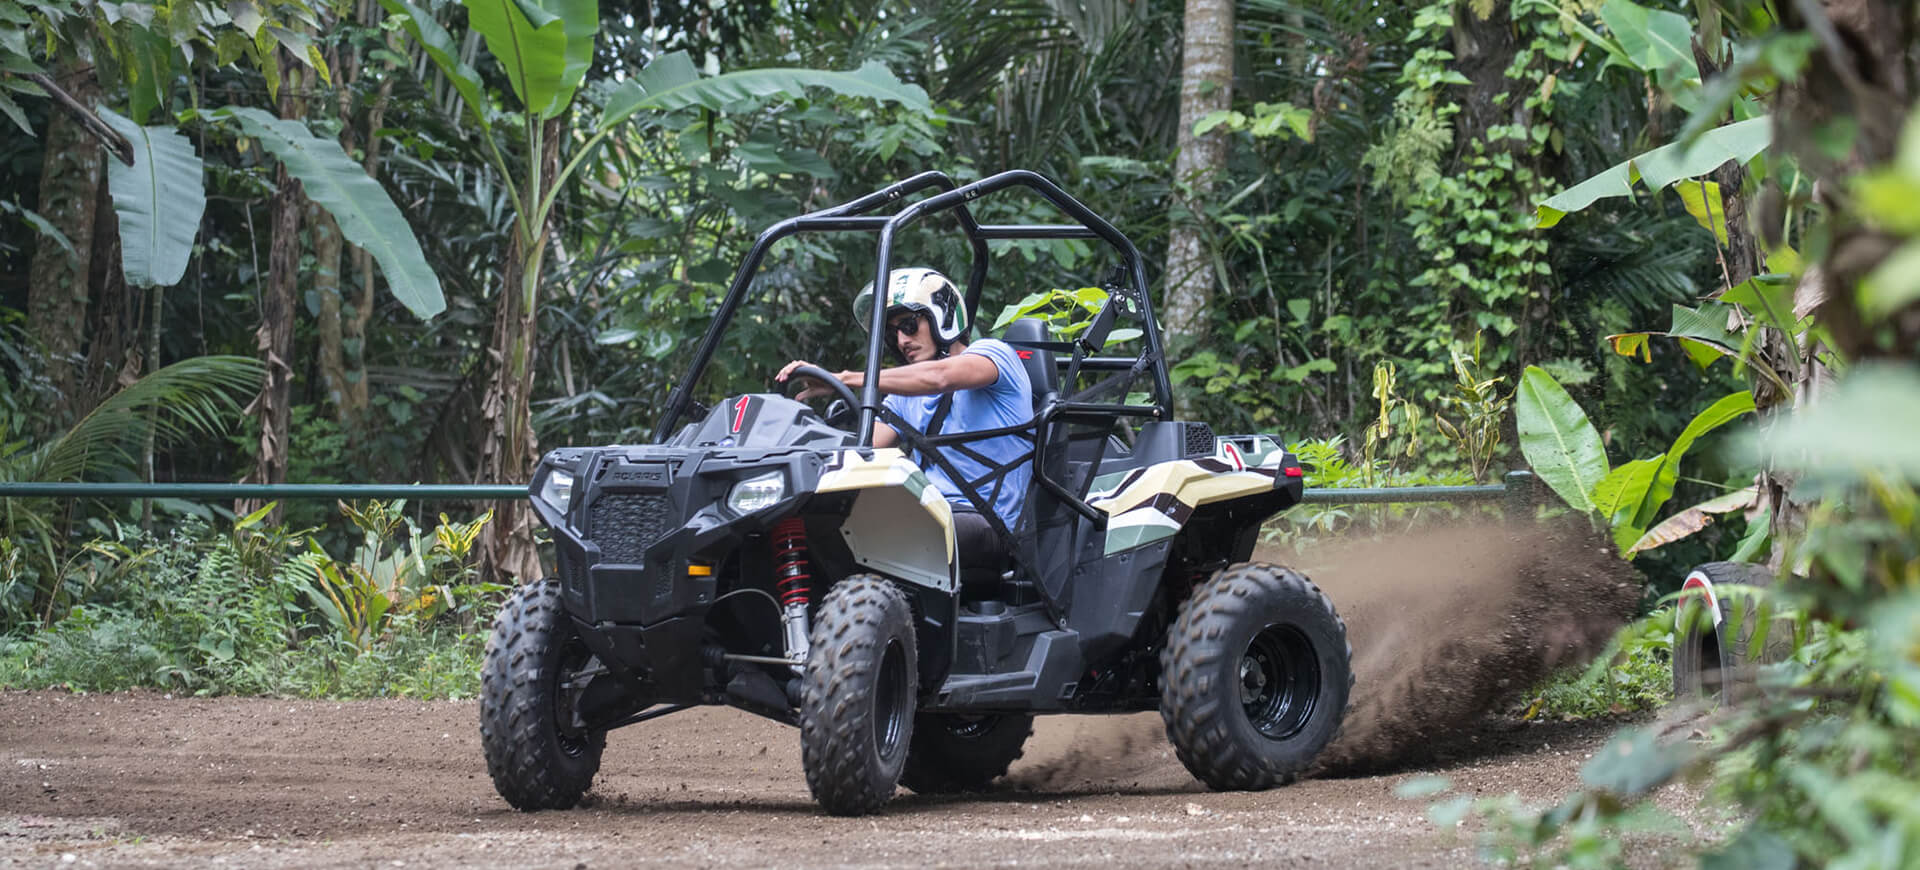 Mason Jungle Buggies Ubud – An Exciting Way To Explore The Island